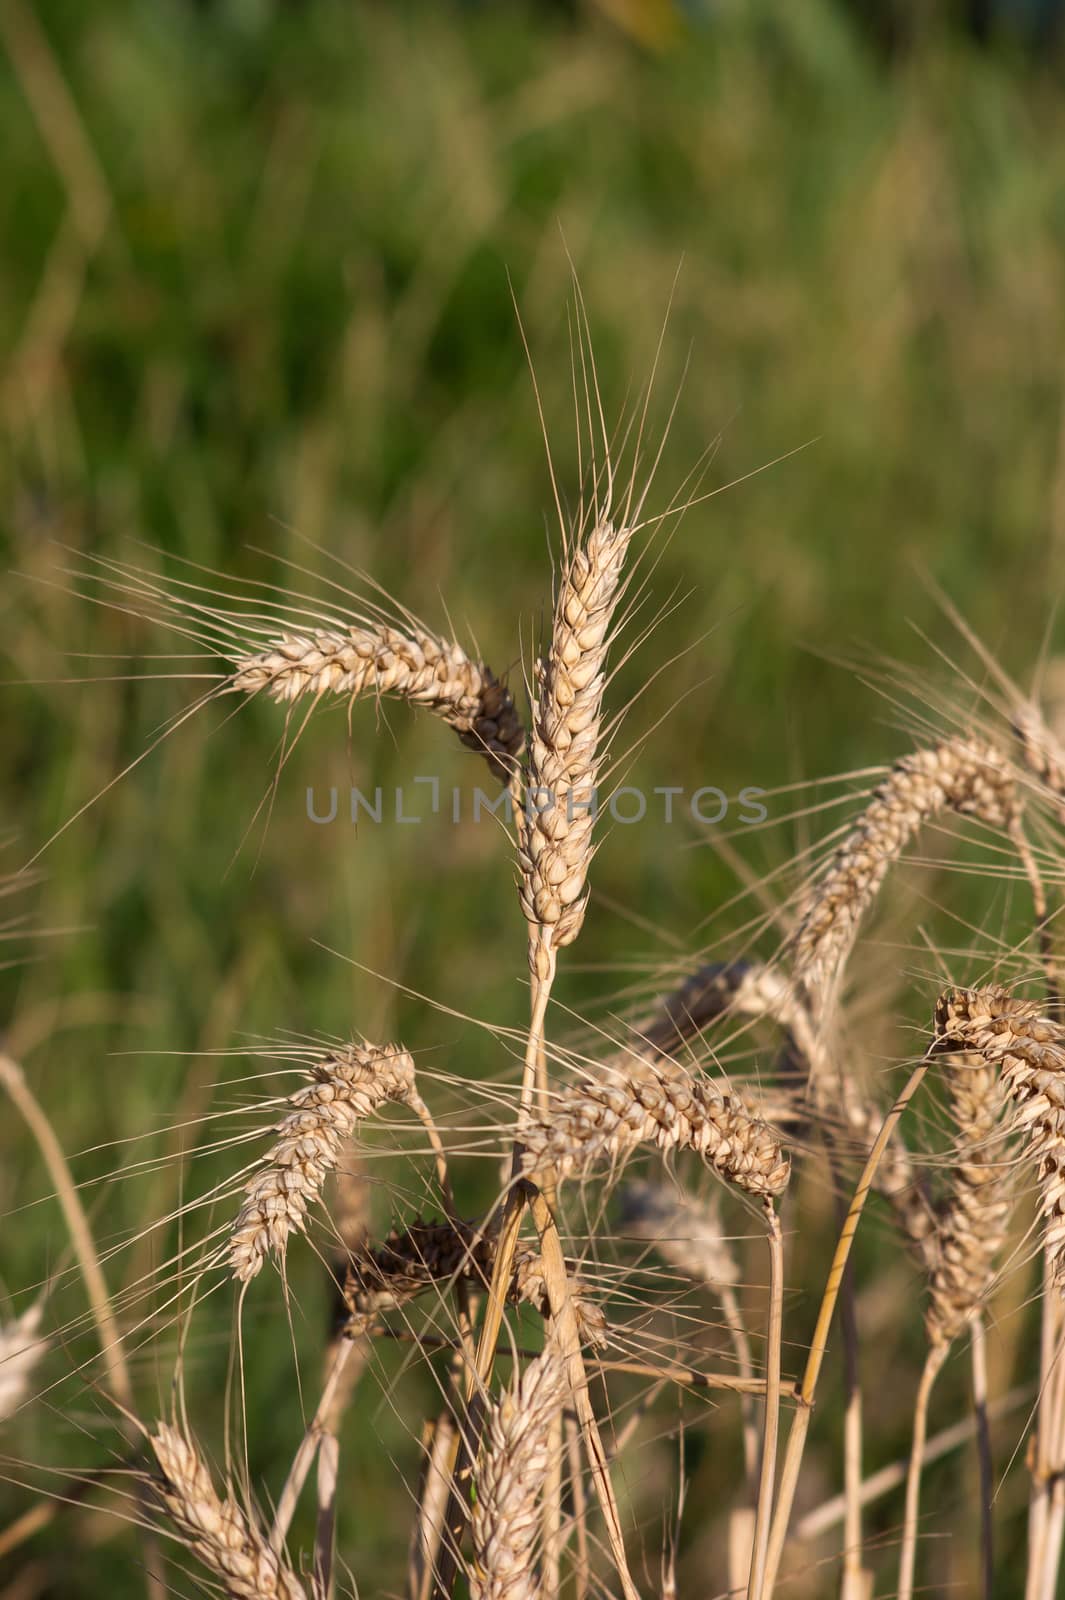 Wheat (Triticum aestivum L.) is the most important grain.